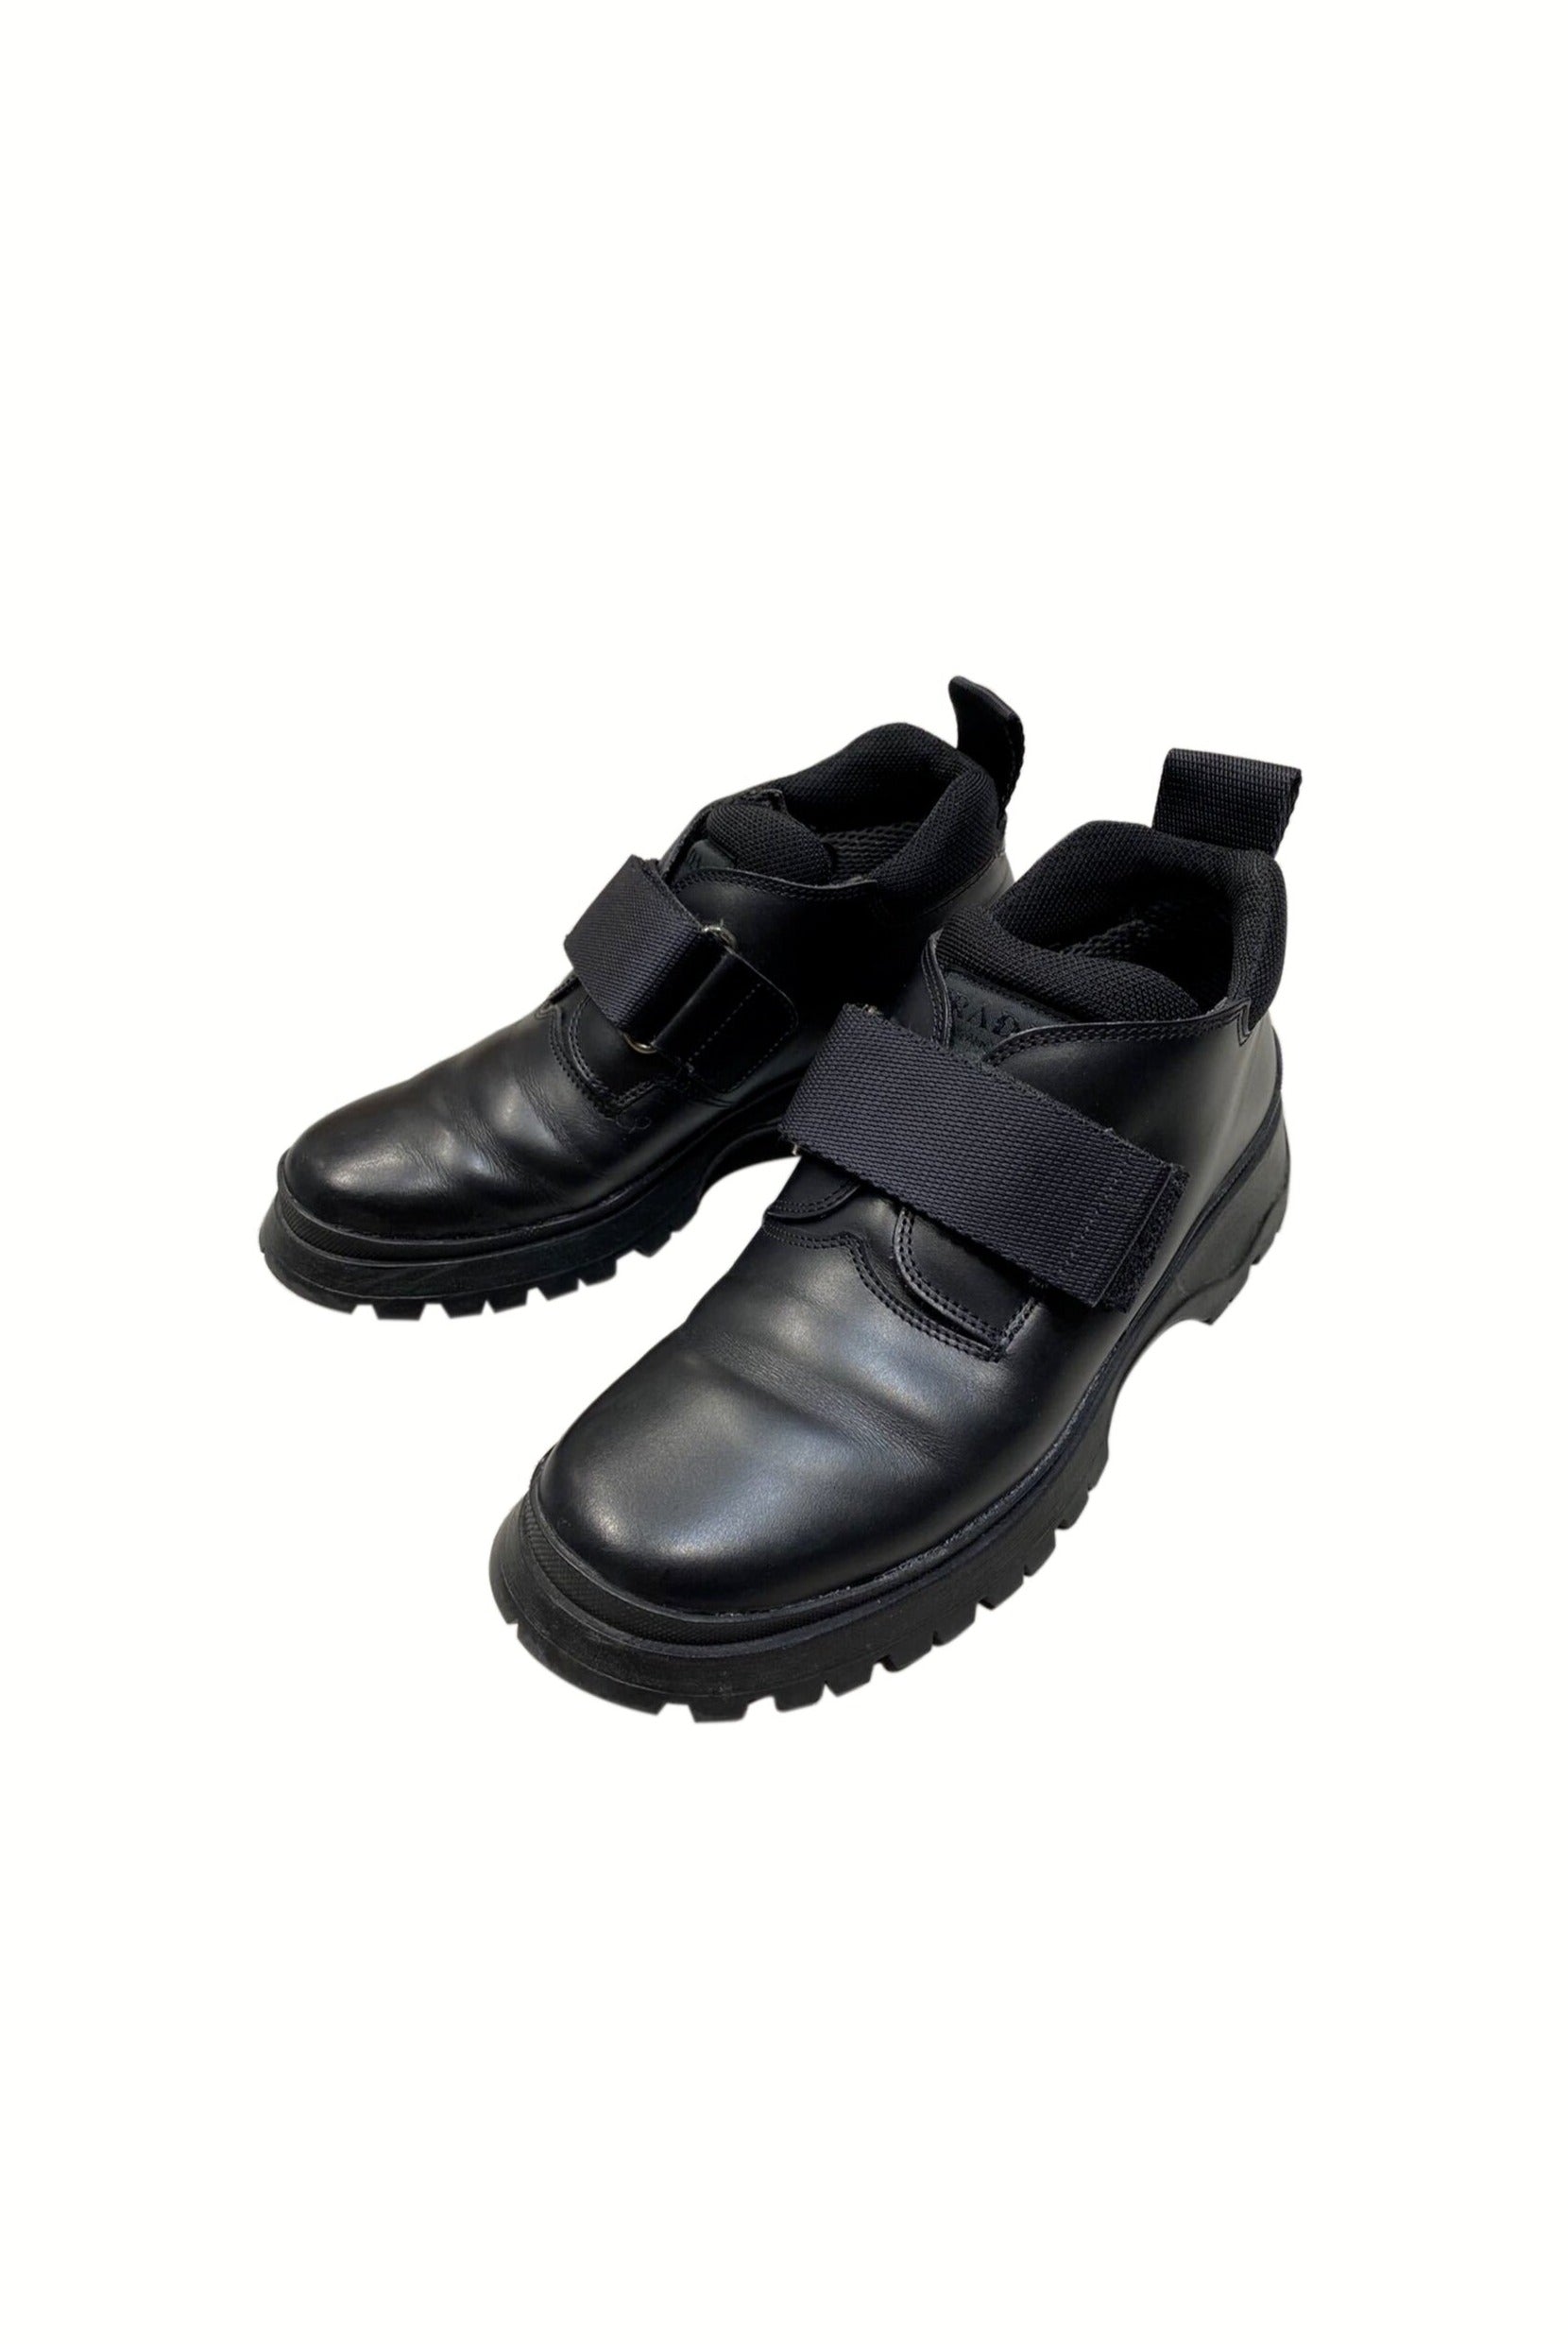 Prada 2000s Black Leather Chunky Shoes · INTO